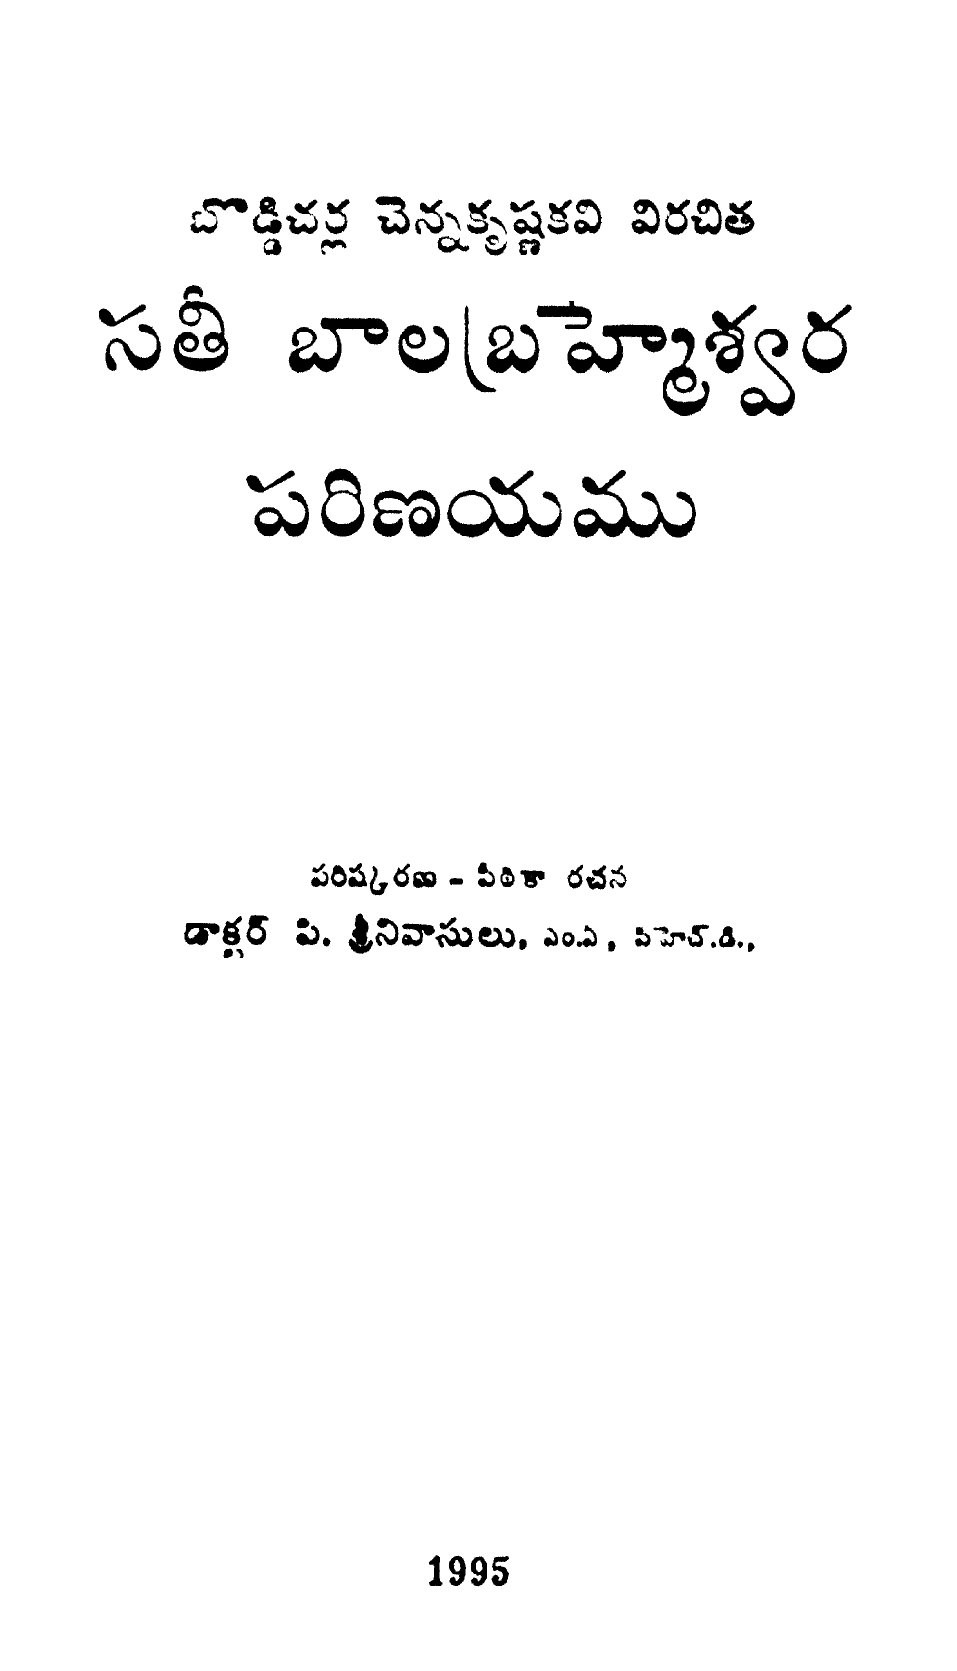 Sati Balabramheswara Parinayamu